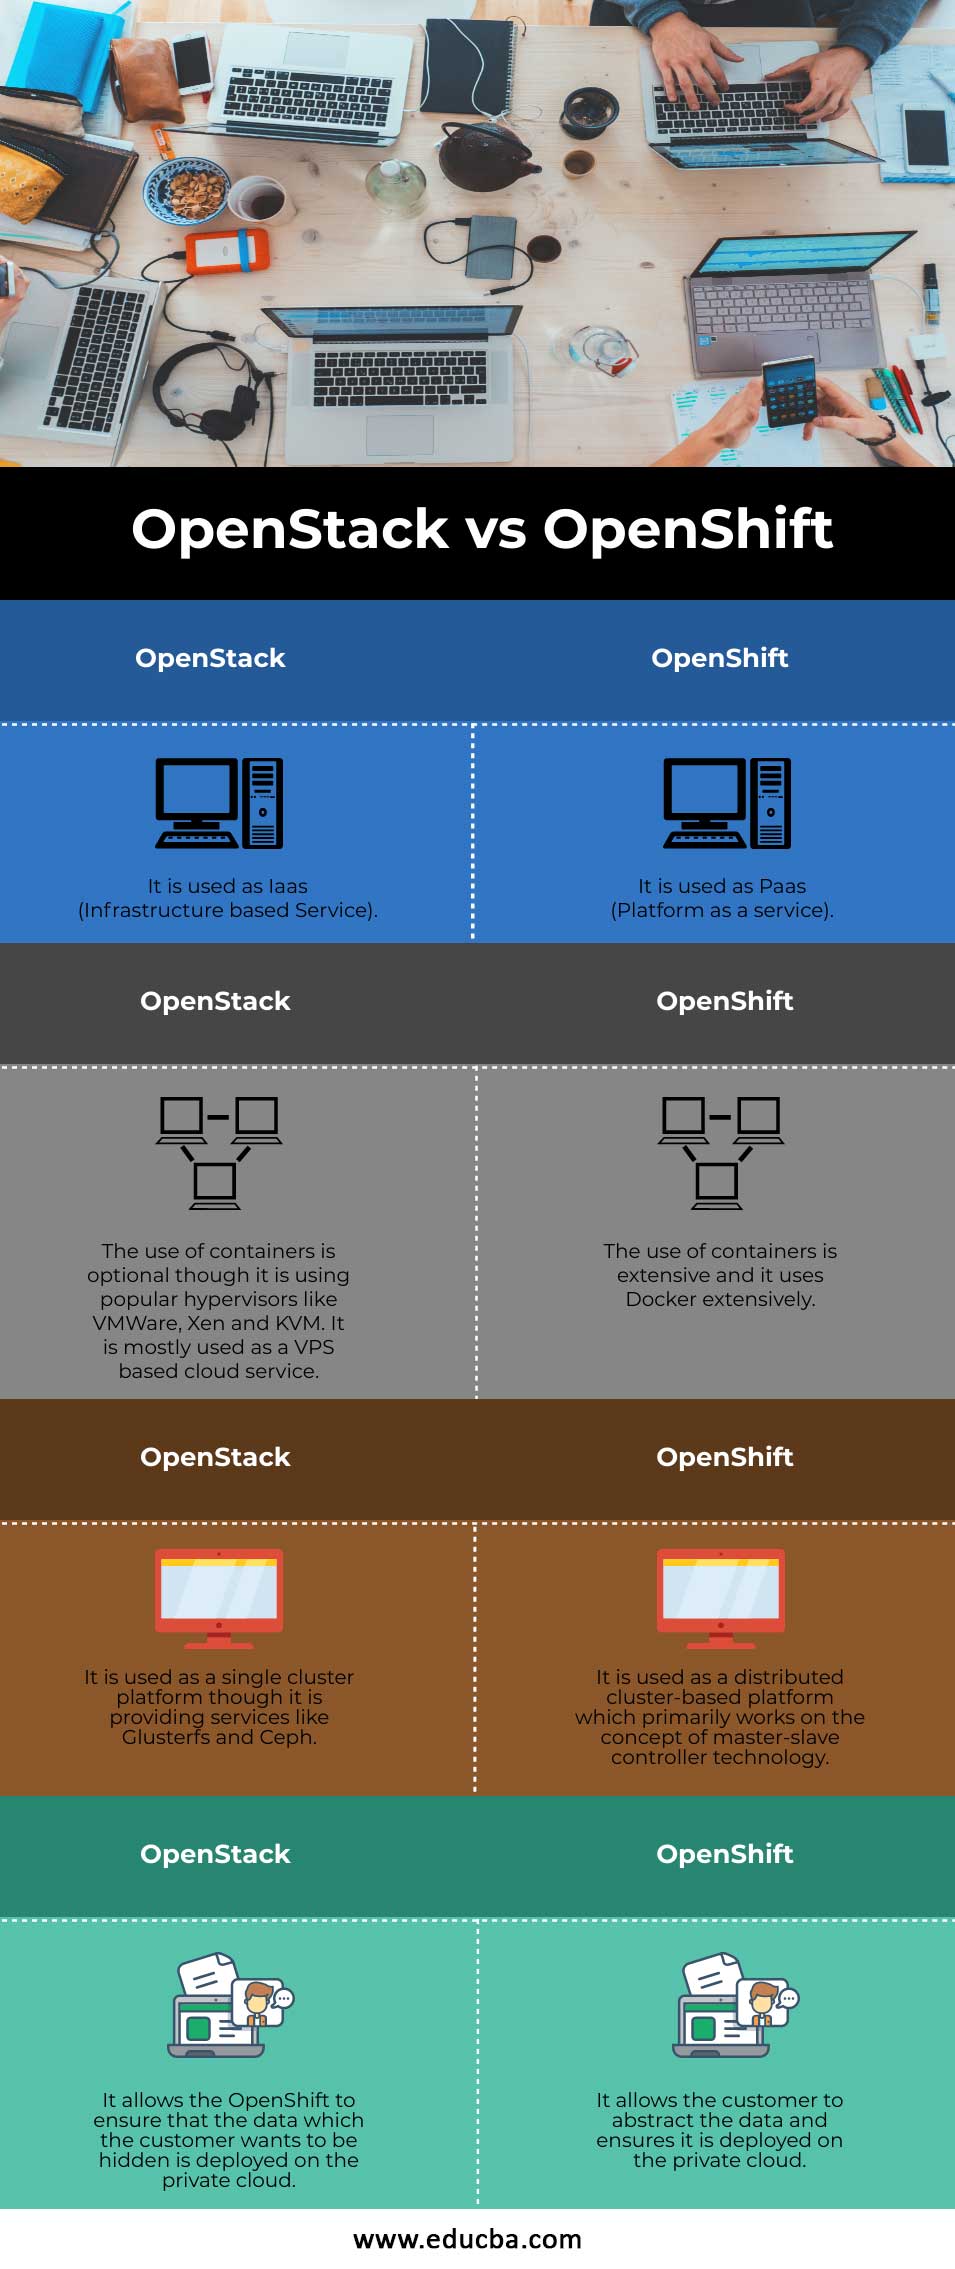 OpenStack vs OpenShift info